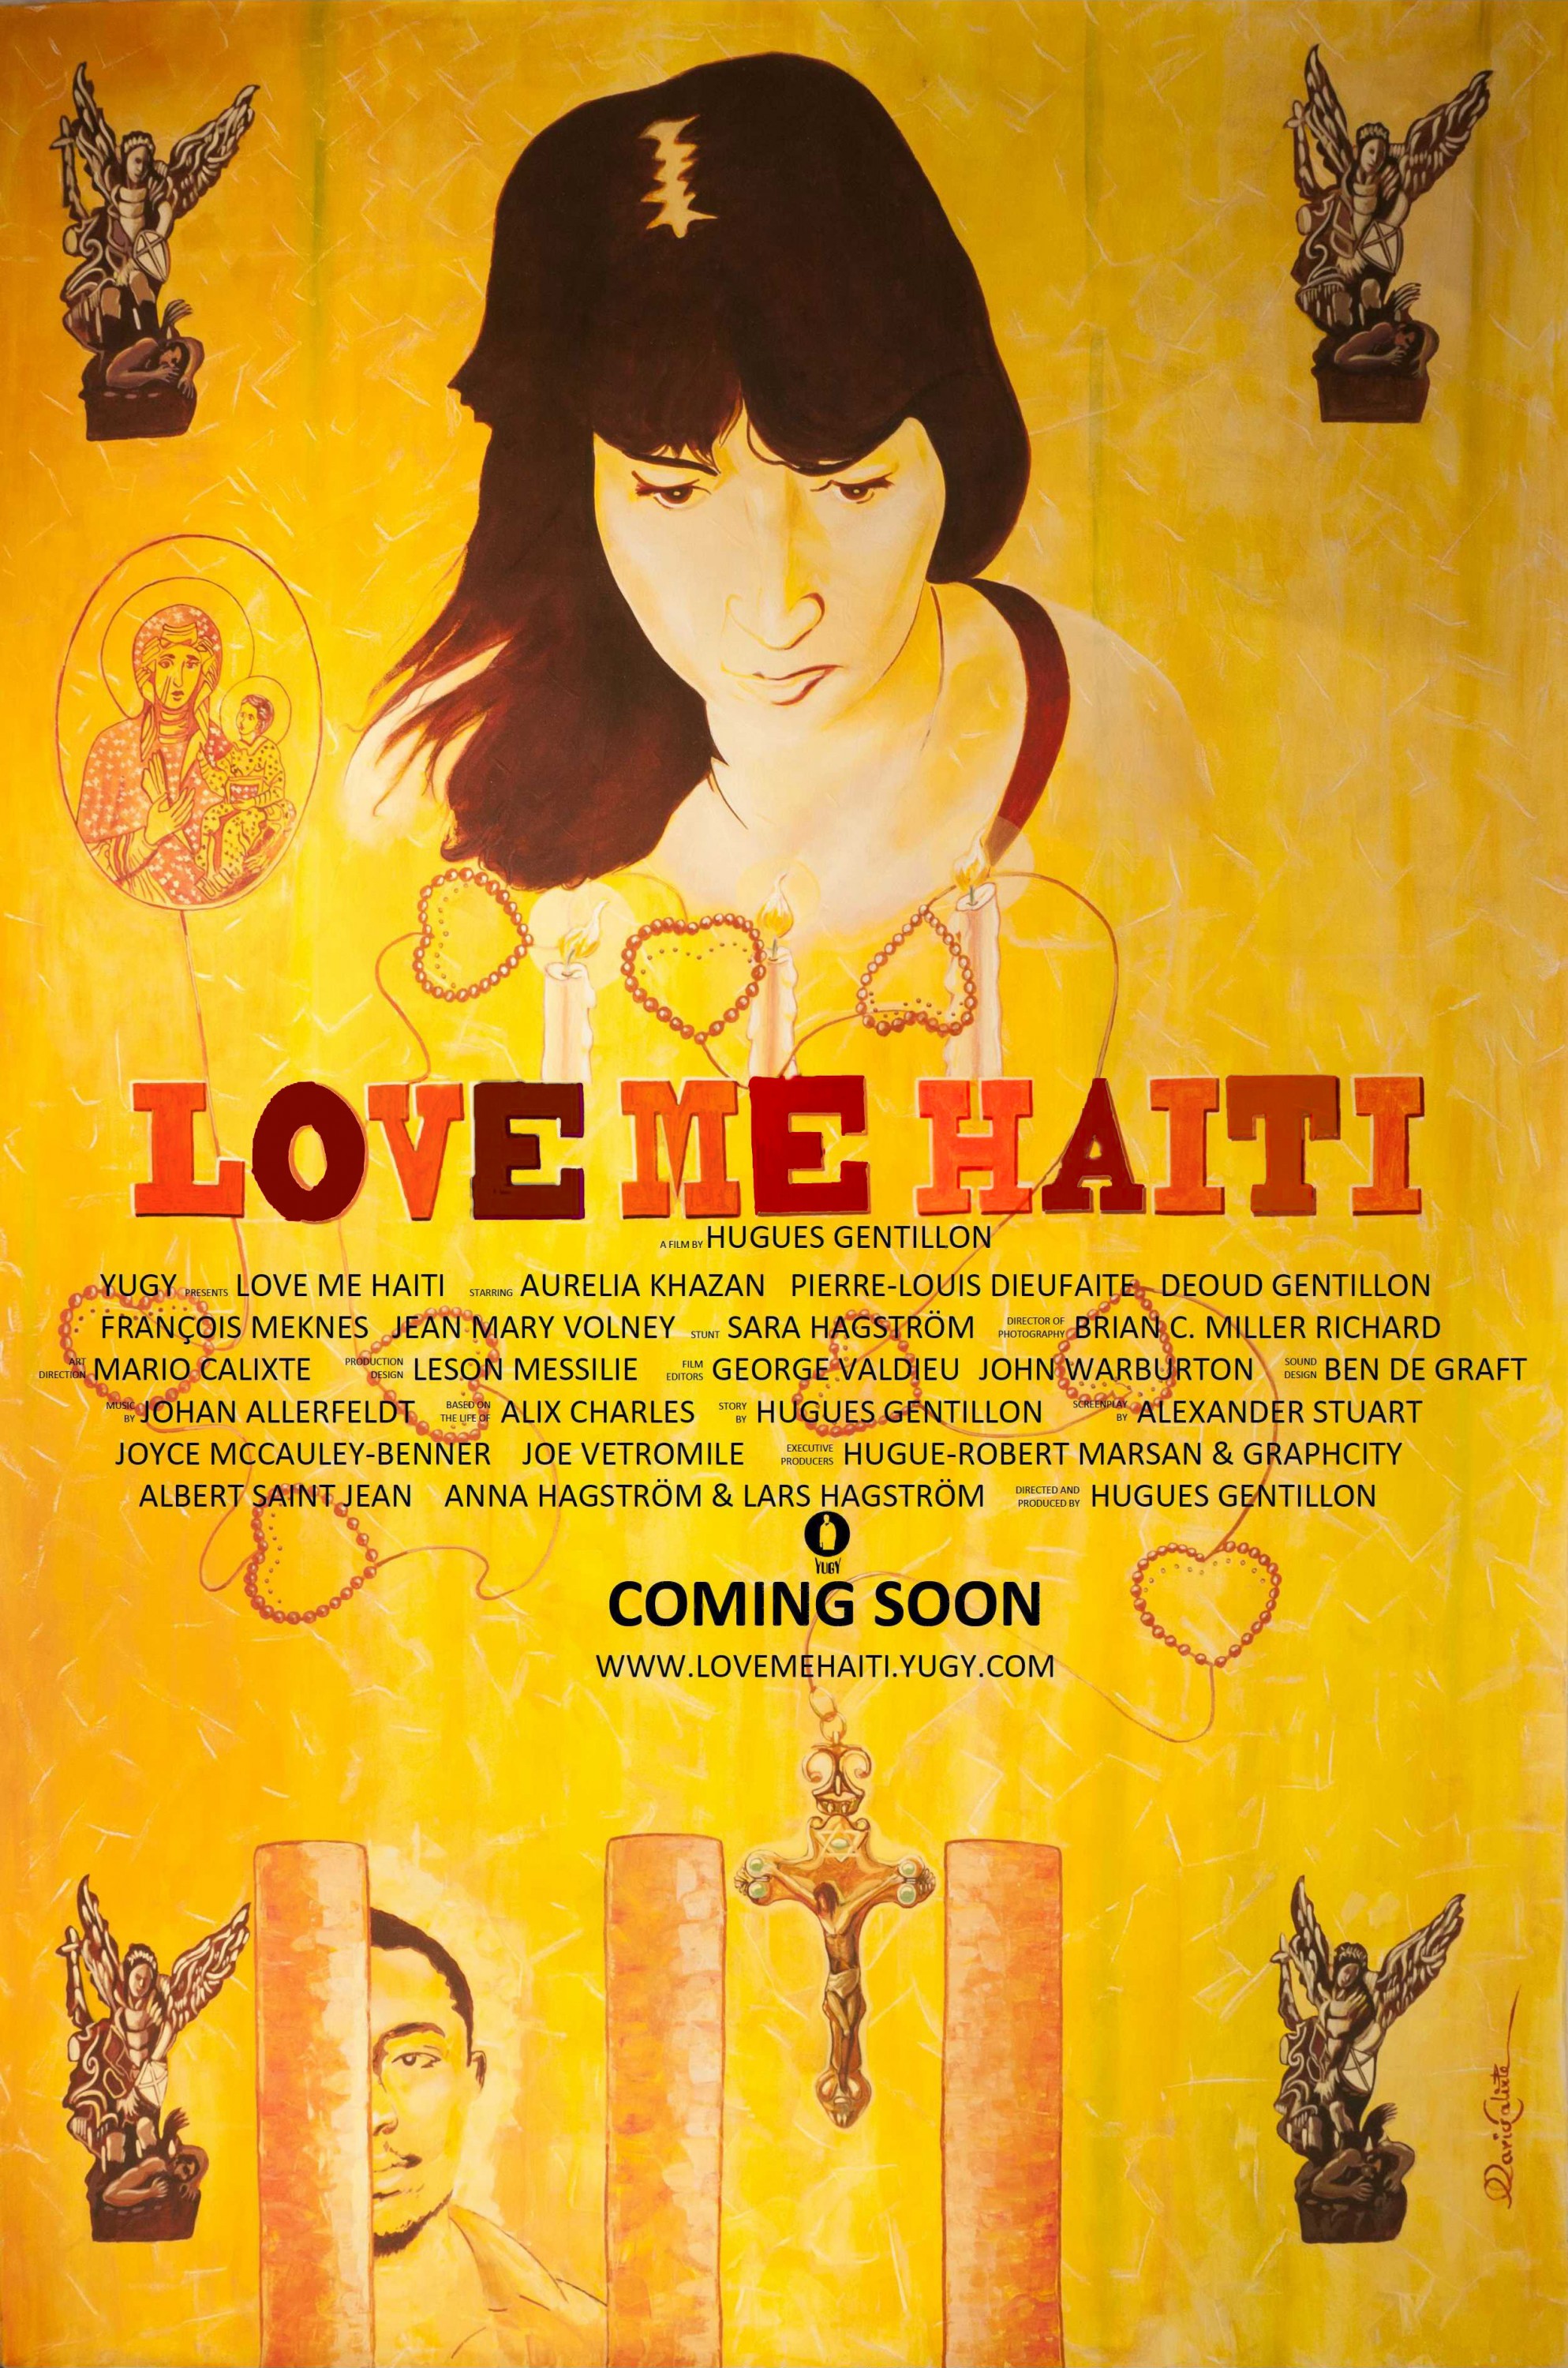 Mega Sized Movie Poster Image for Love Me Haiti